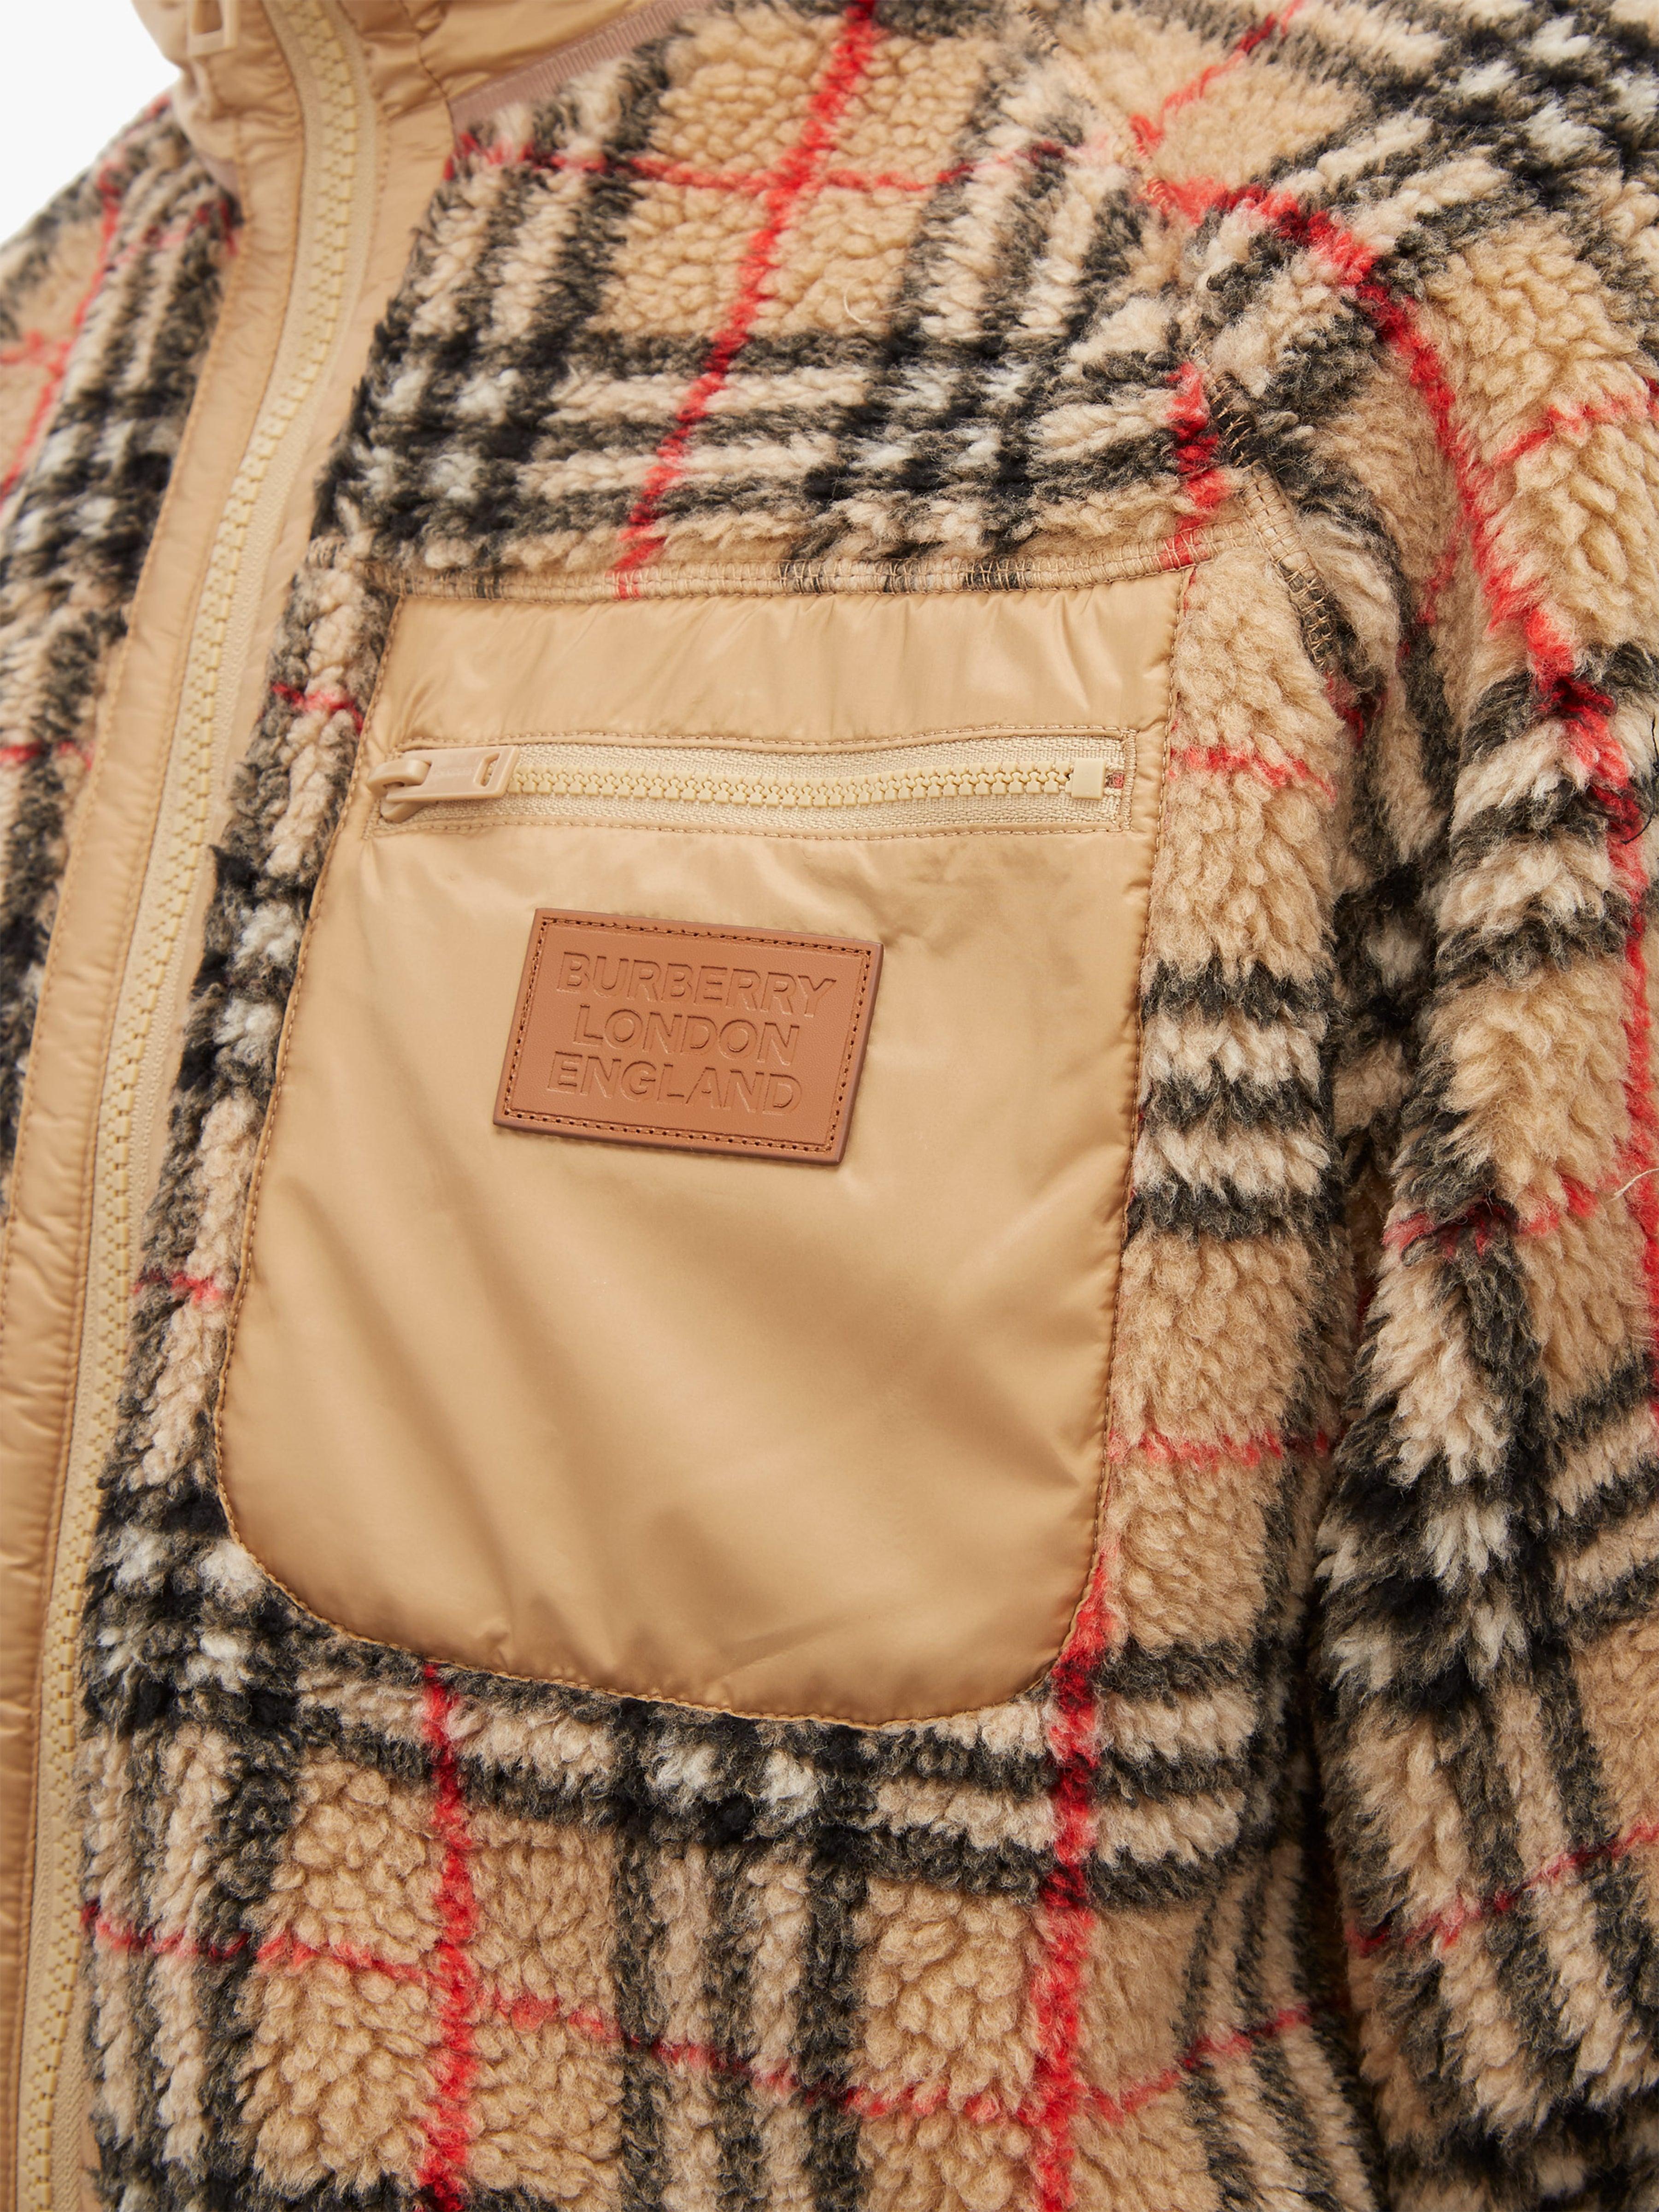 Burberry Westley Vintage Check Fleece Jacket for Men | Lyst UK